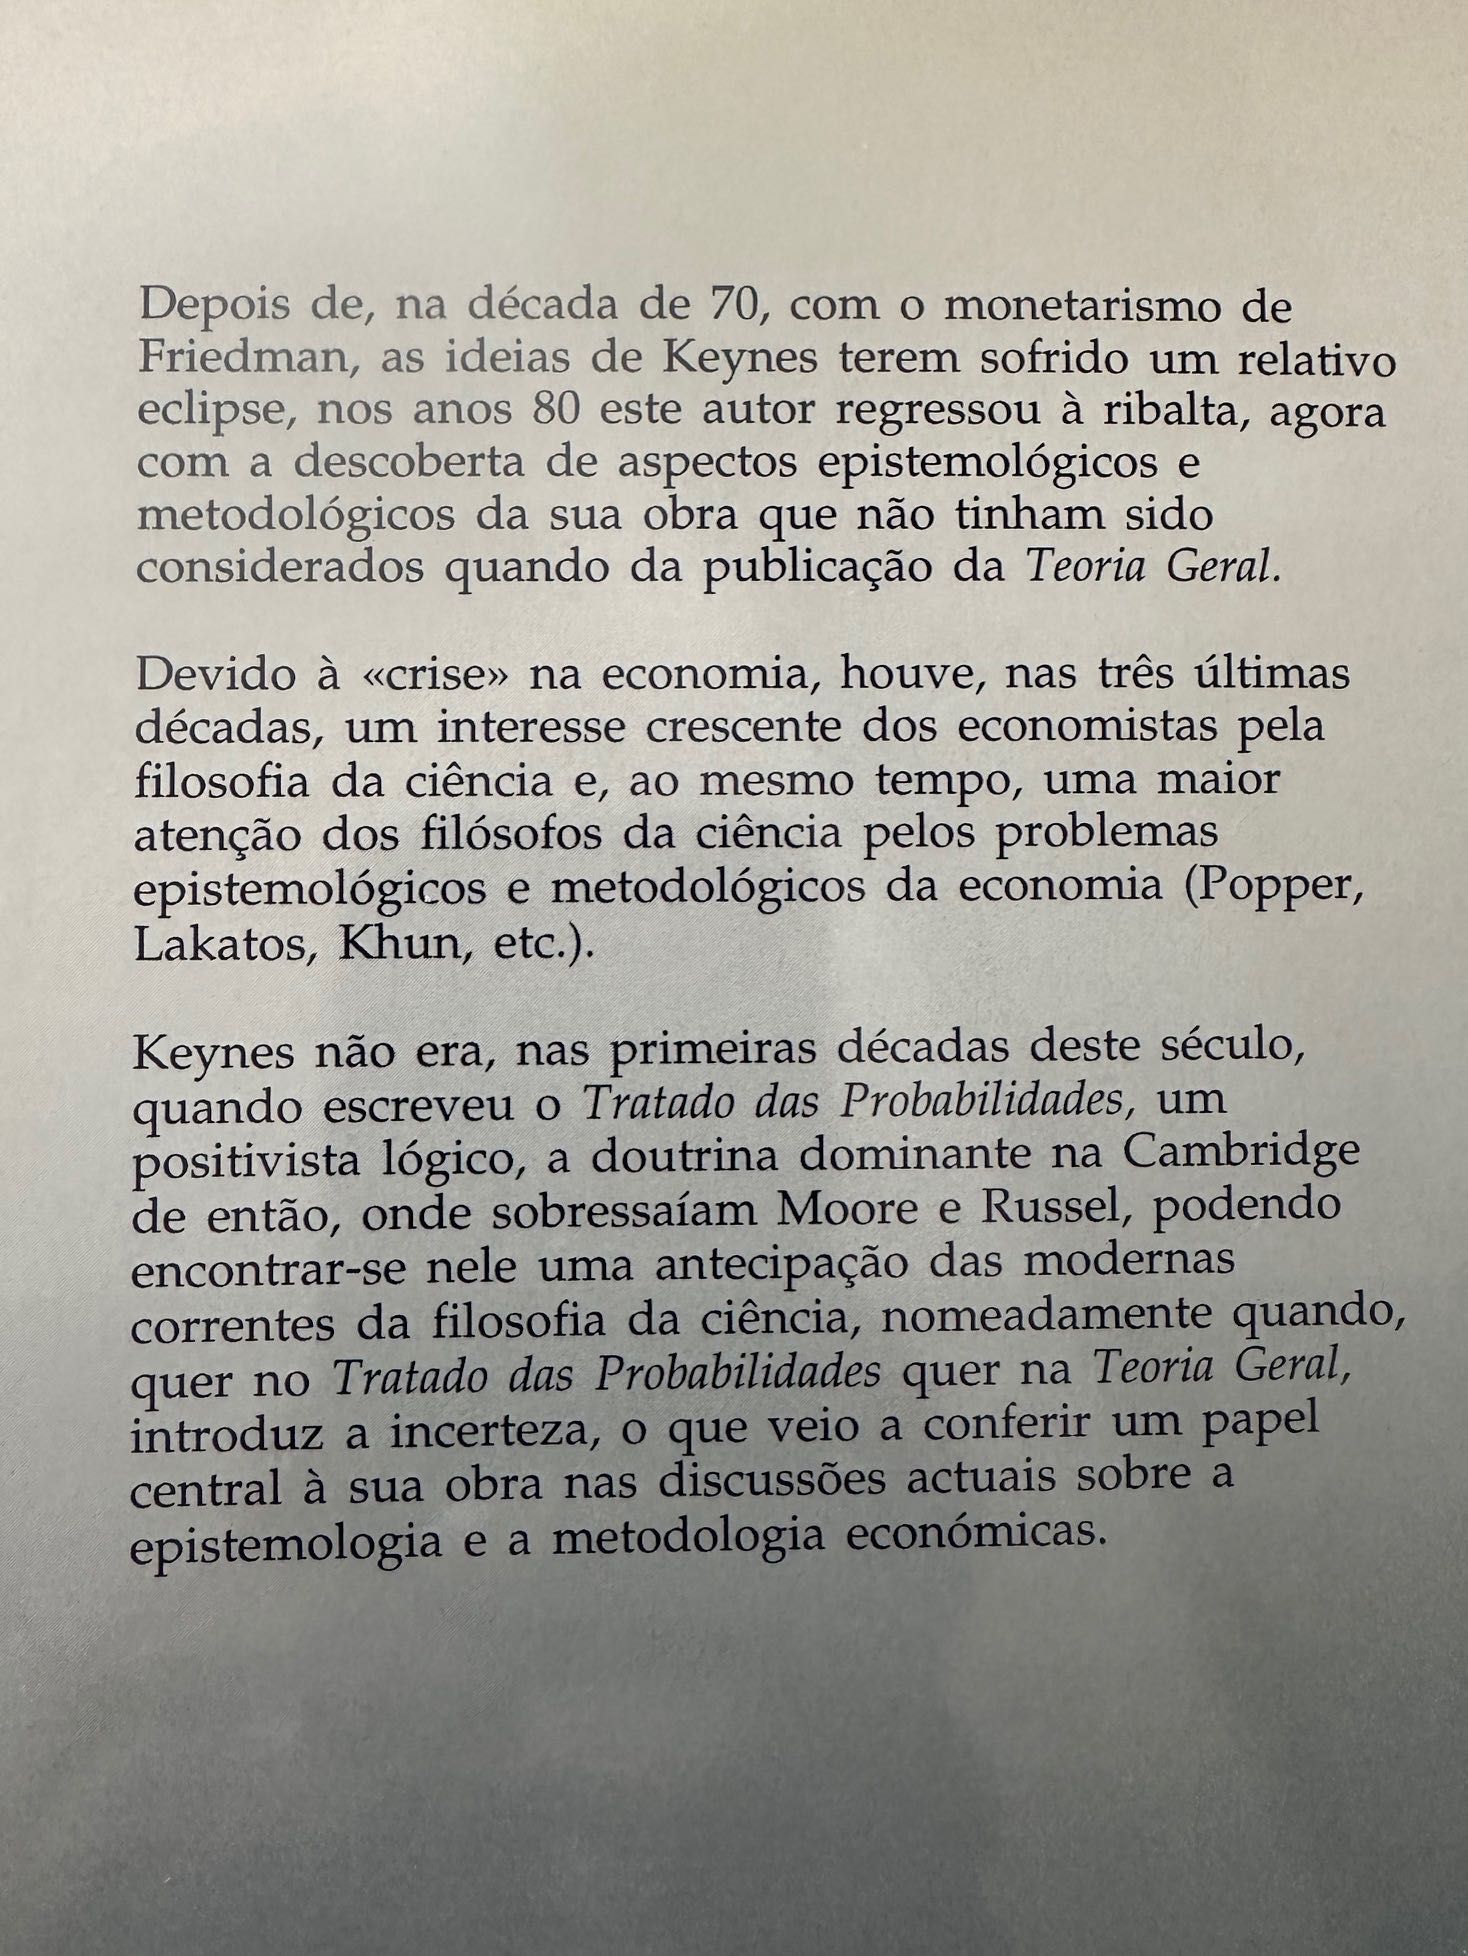 O Pensamento de Keynes - Manuel Jacinto Nunes - 1998